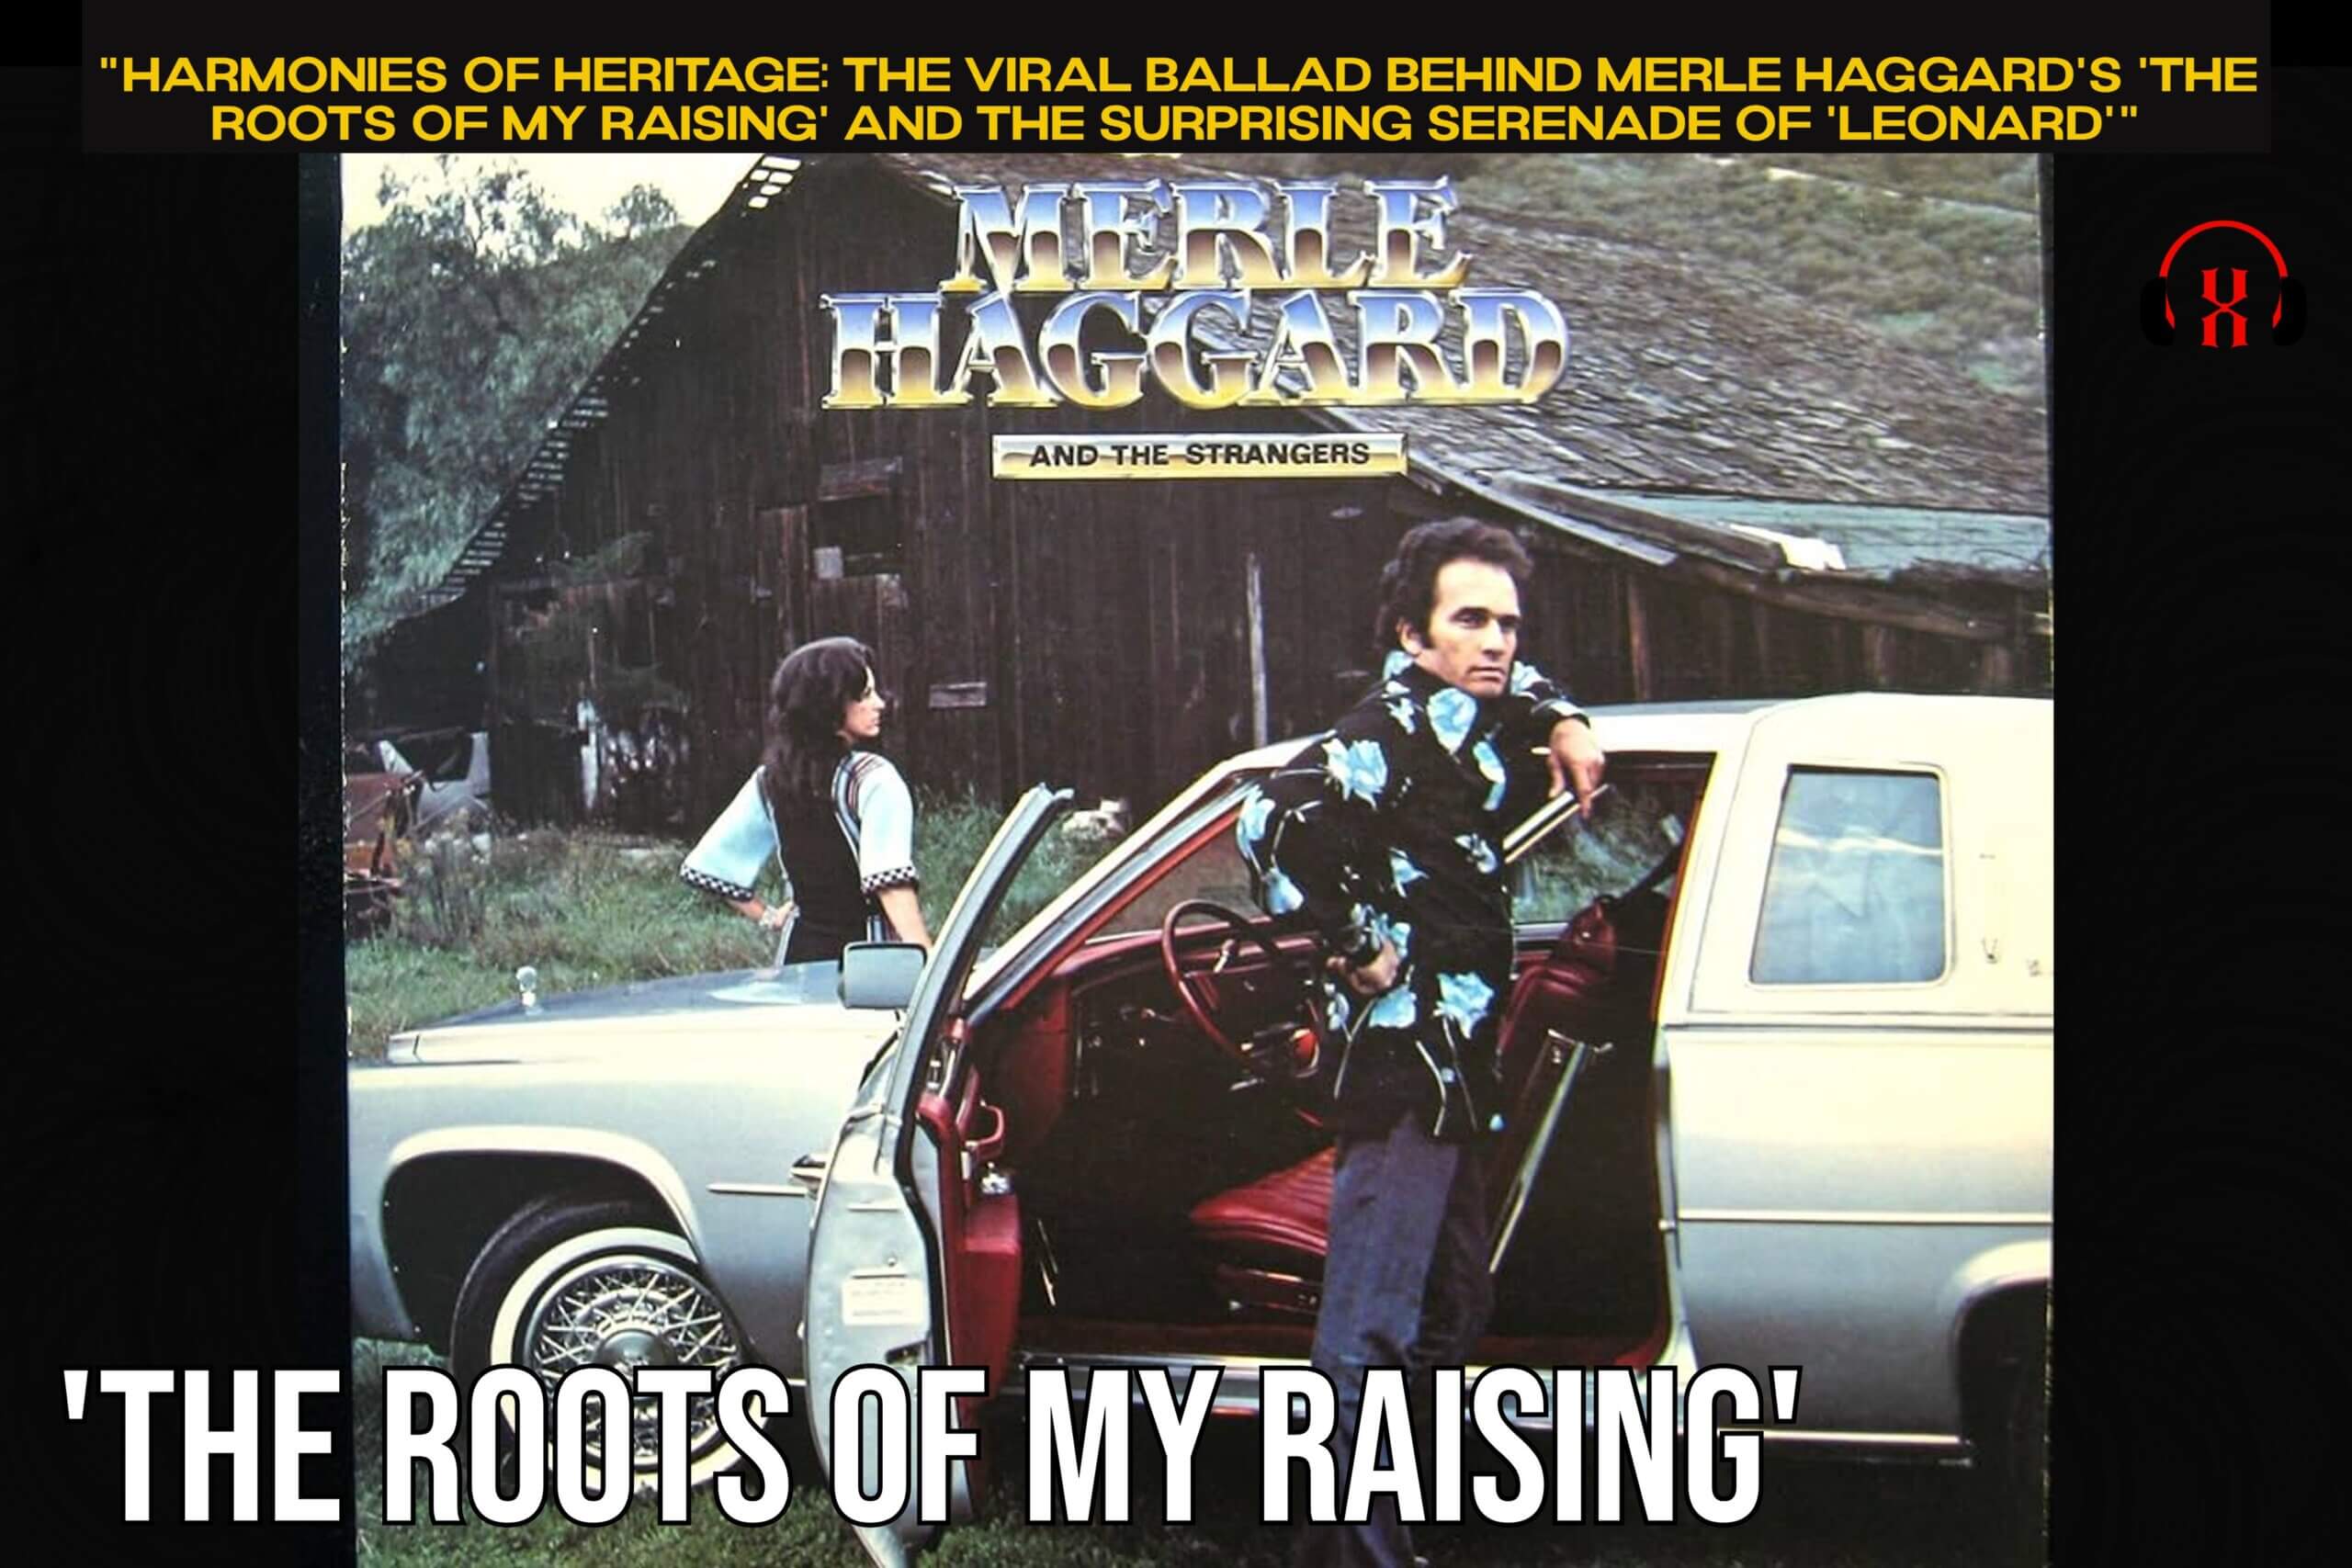 "Harmonies of Heritage: The Viral Ballad Behind Merle Haggard's 'The Roots of My Raising' and the Surprising Serenade of 'Leonard'"